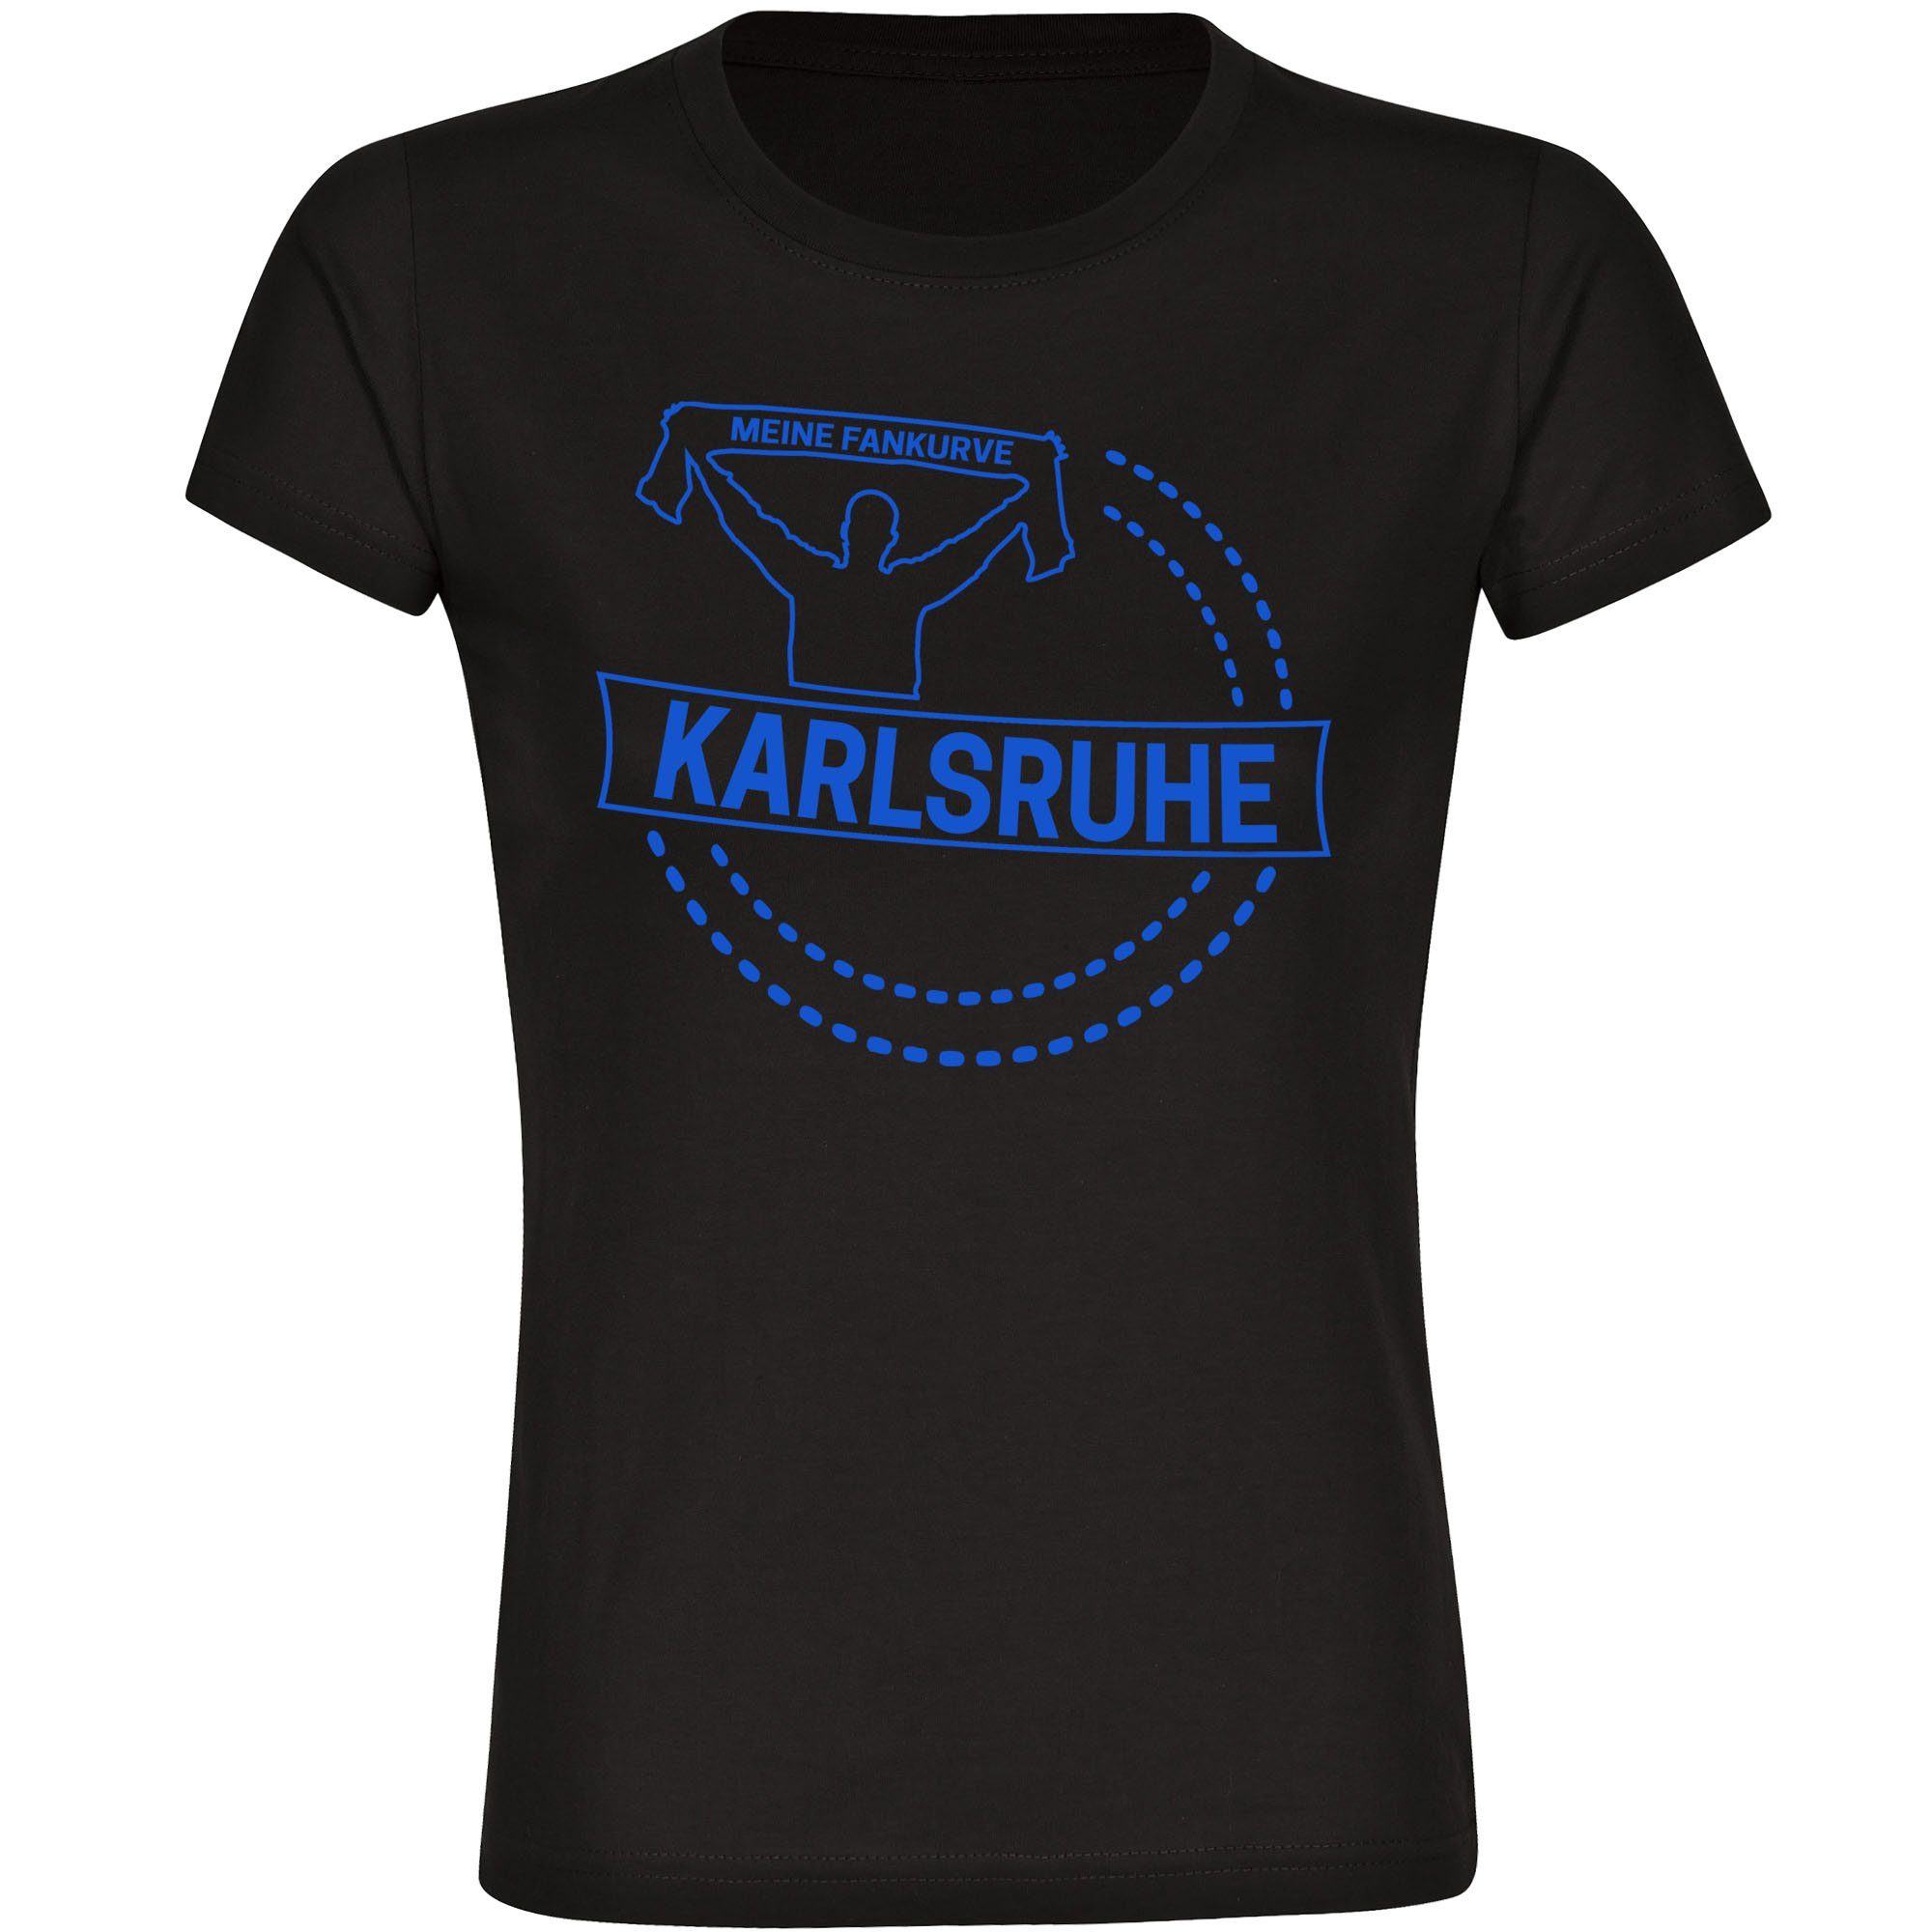 multifanshop T-Shirt Damen Karlsruhe - Meine Fankurve - Frauen